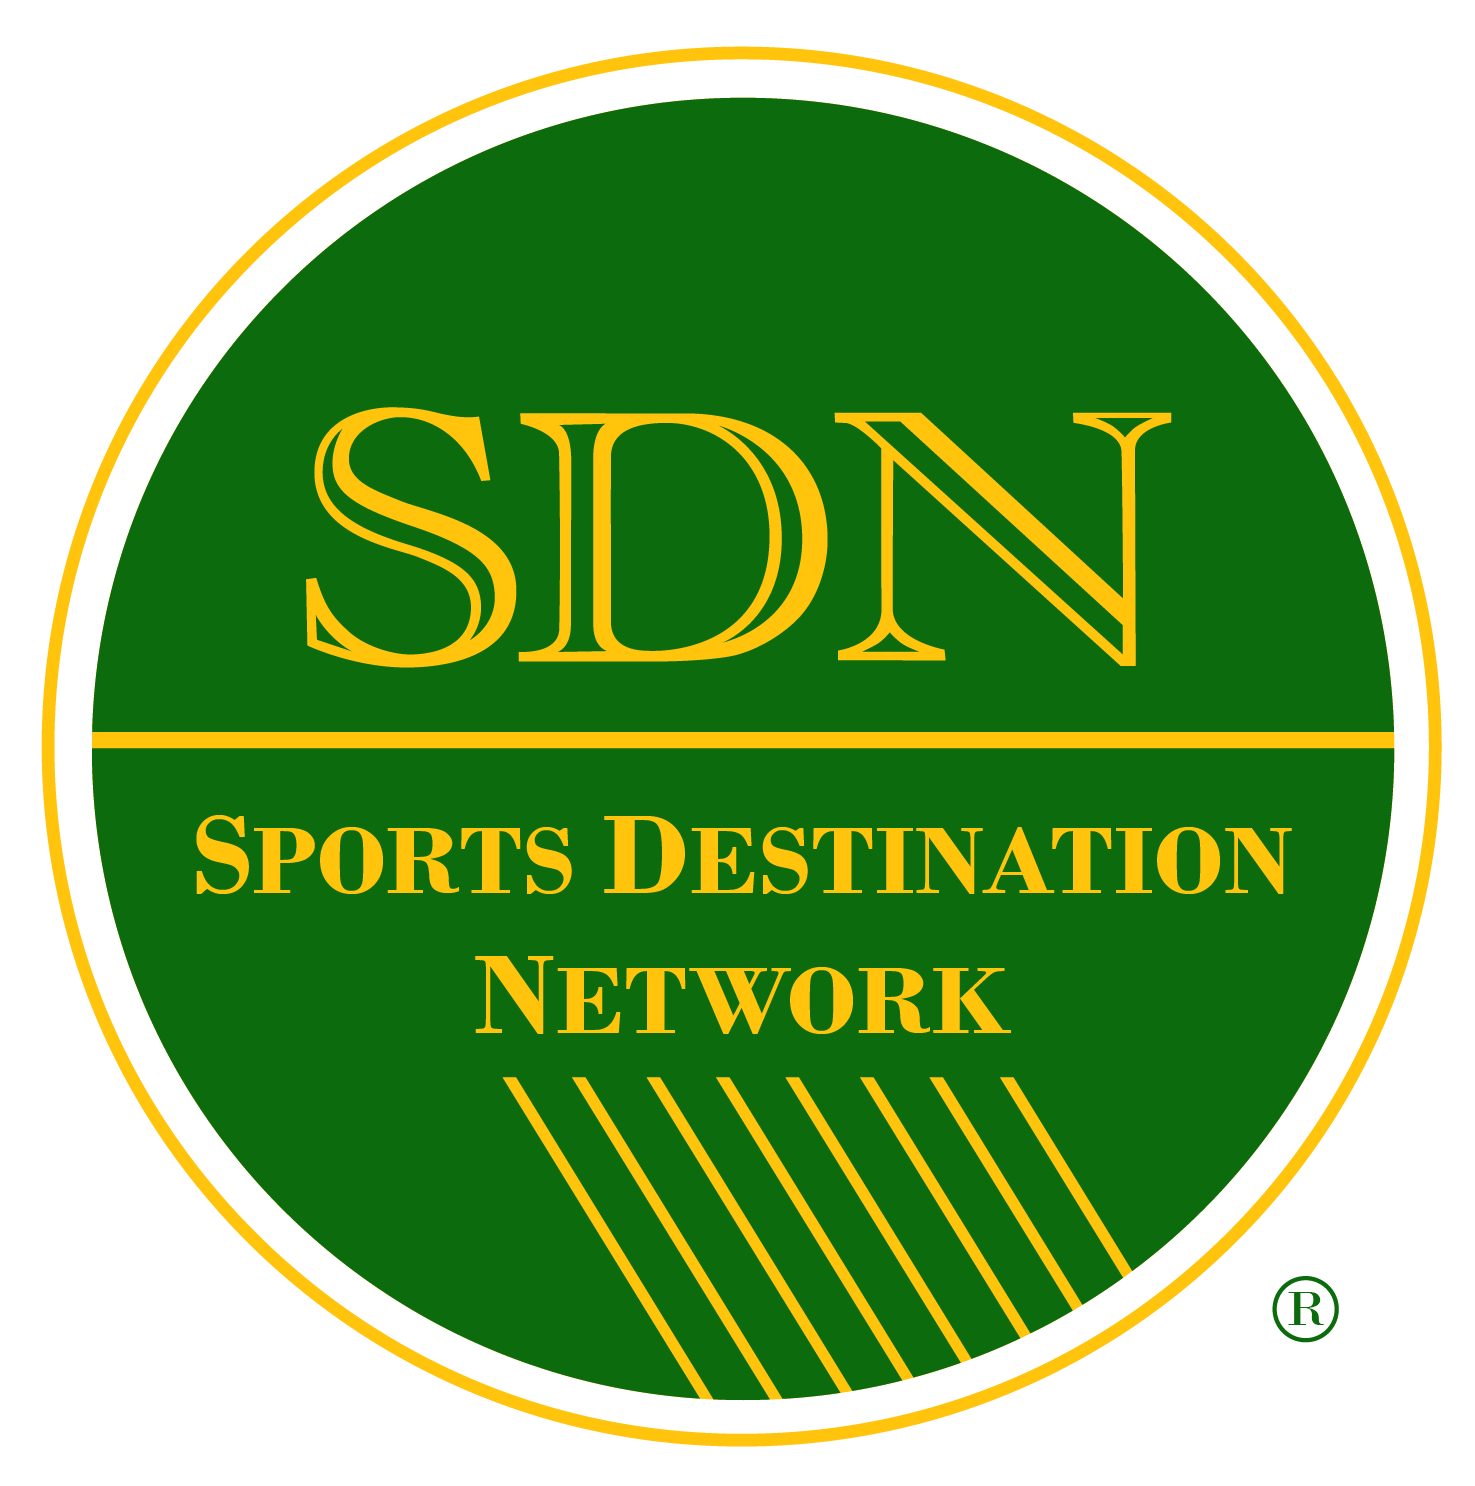 Sports Destination Network, Inc